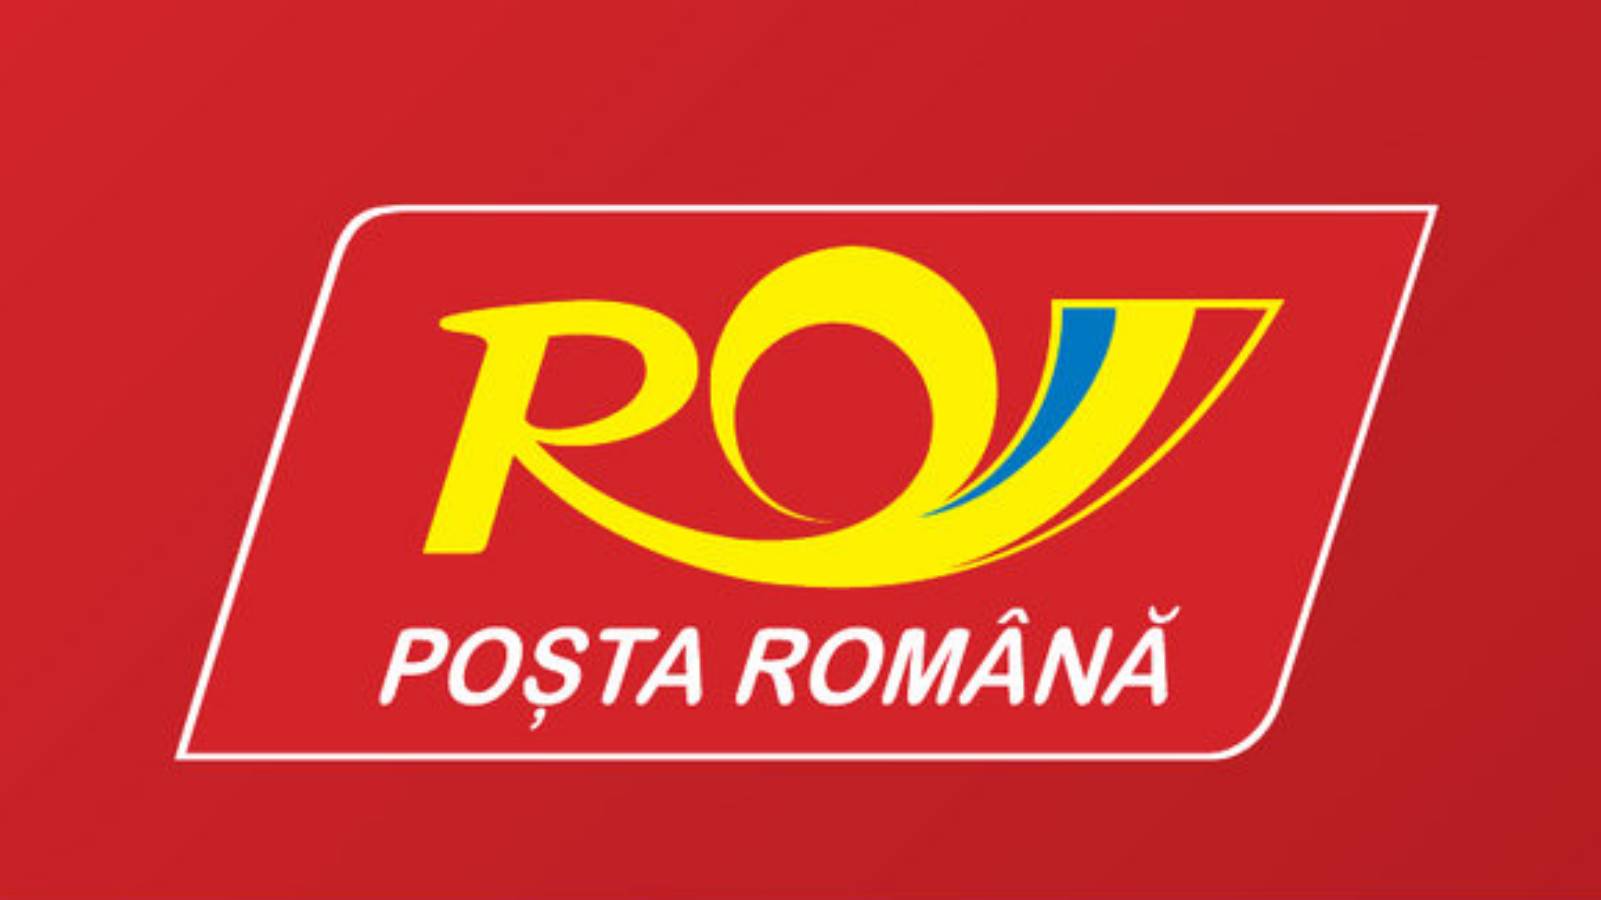 Romanian Post message insured value